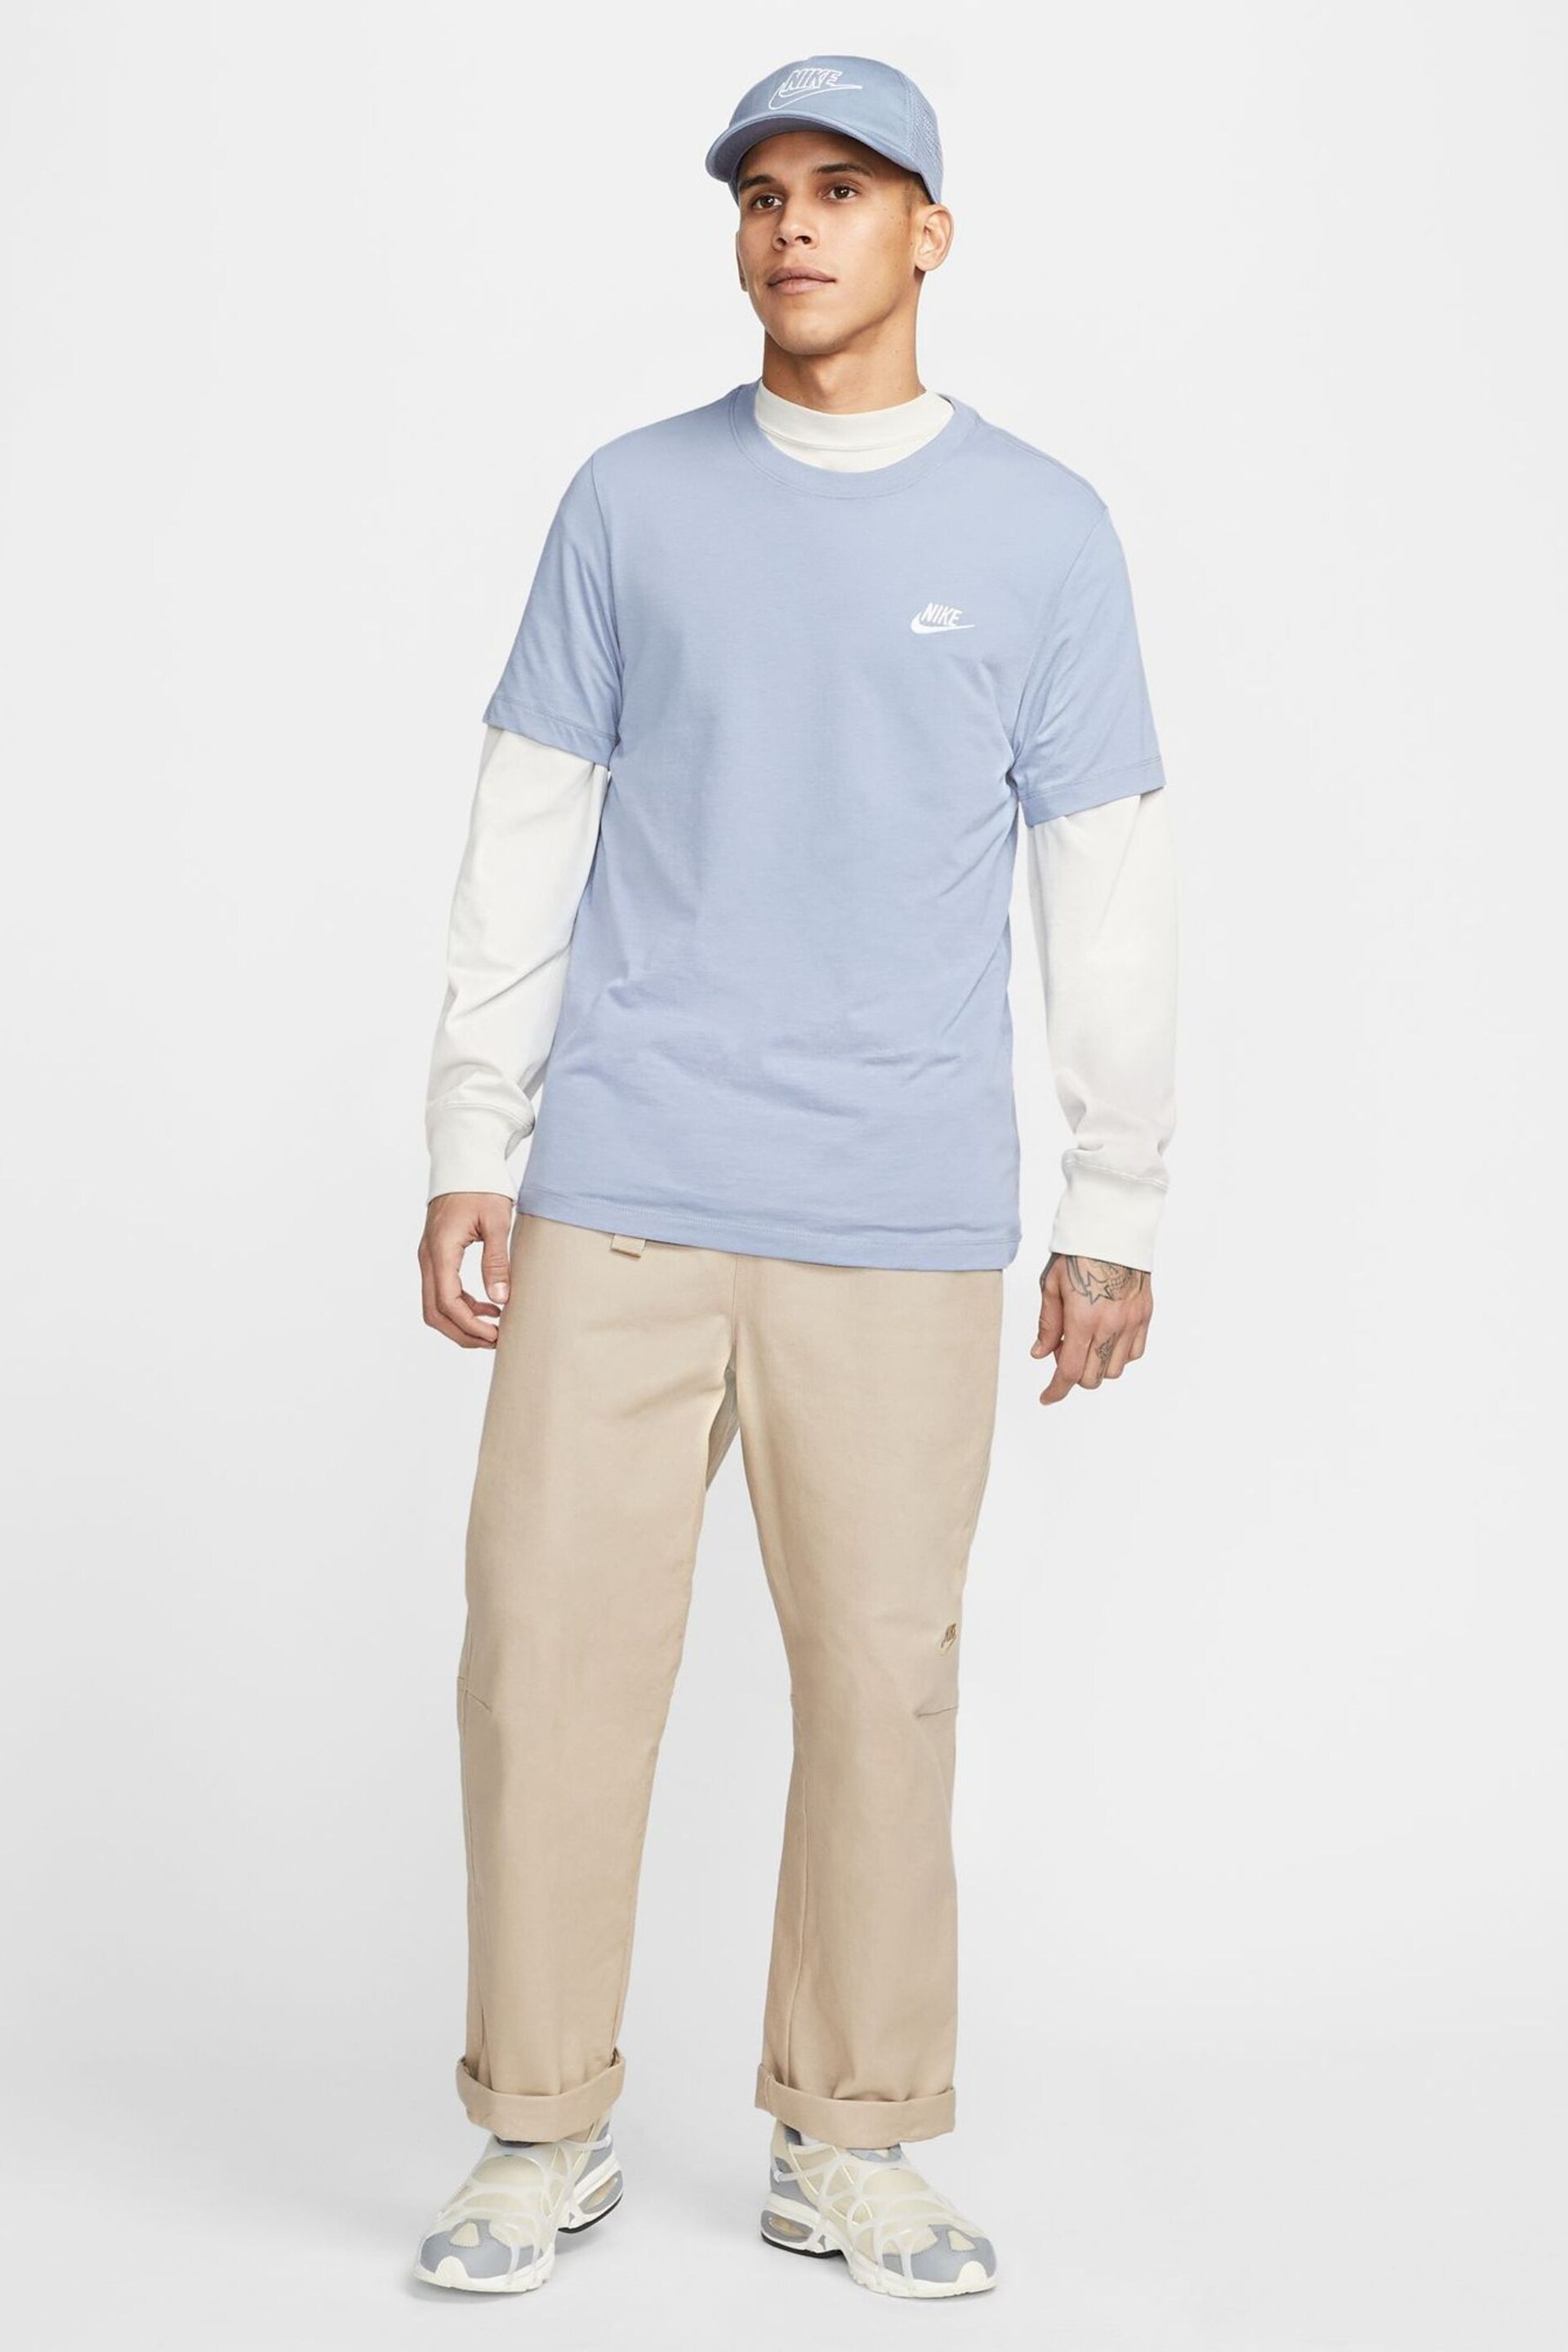 Nike Slate Grey Club T-Shirt - Image 2 of 9